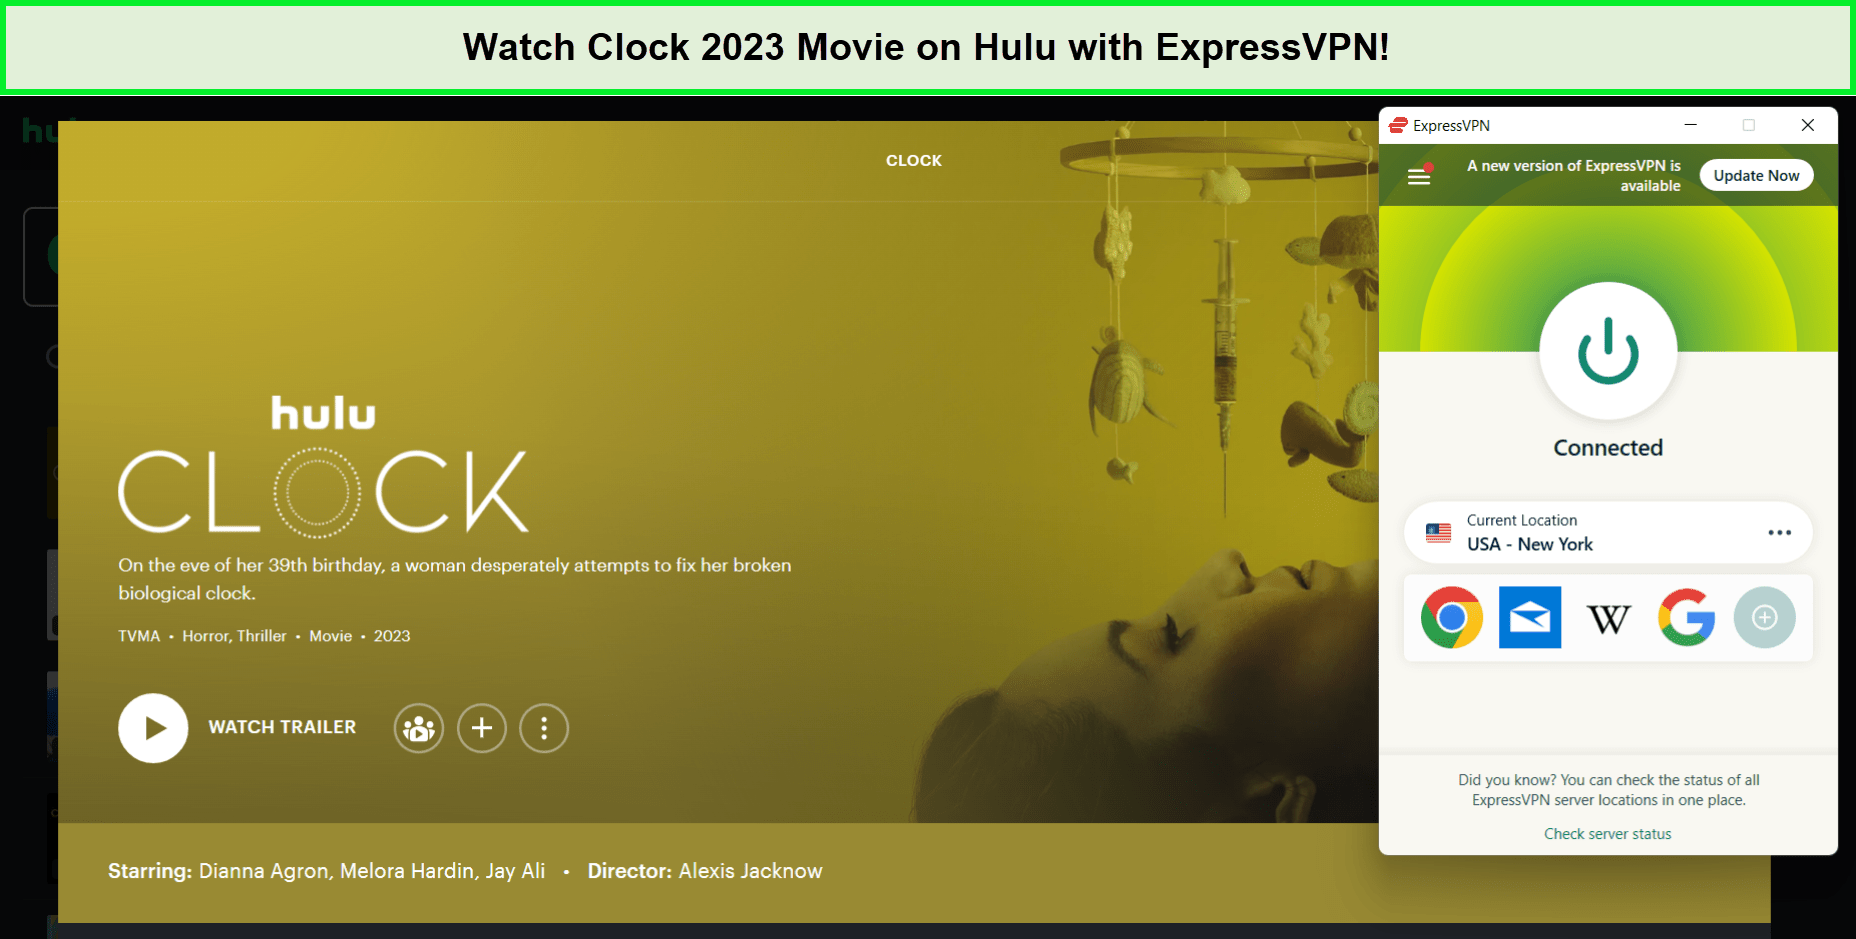 With-ExpressVPN-Watch-Clock-2023-Movie-outside-USA-on-Hulu